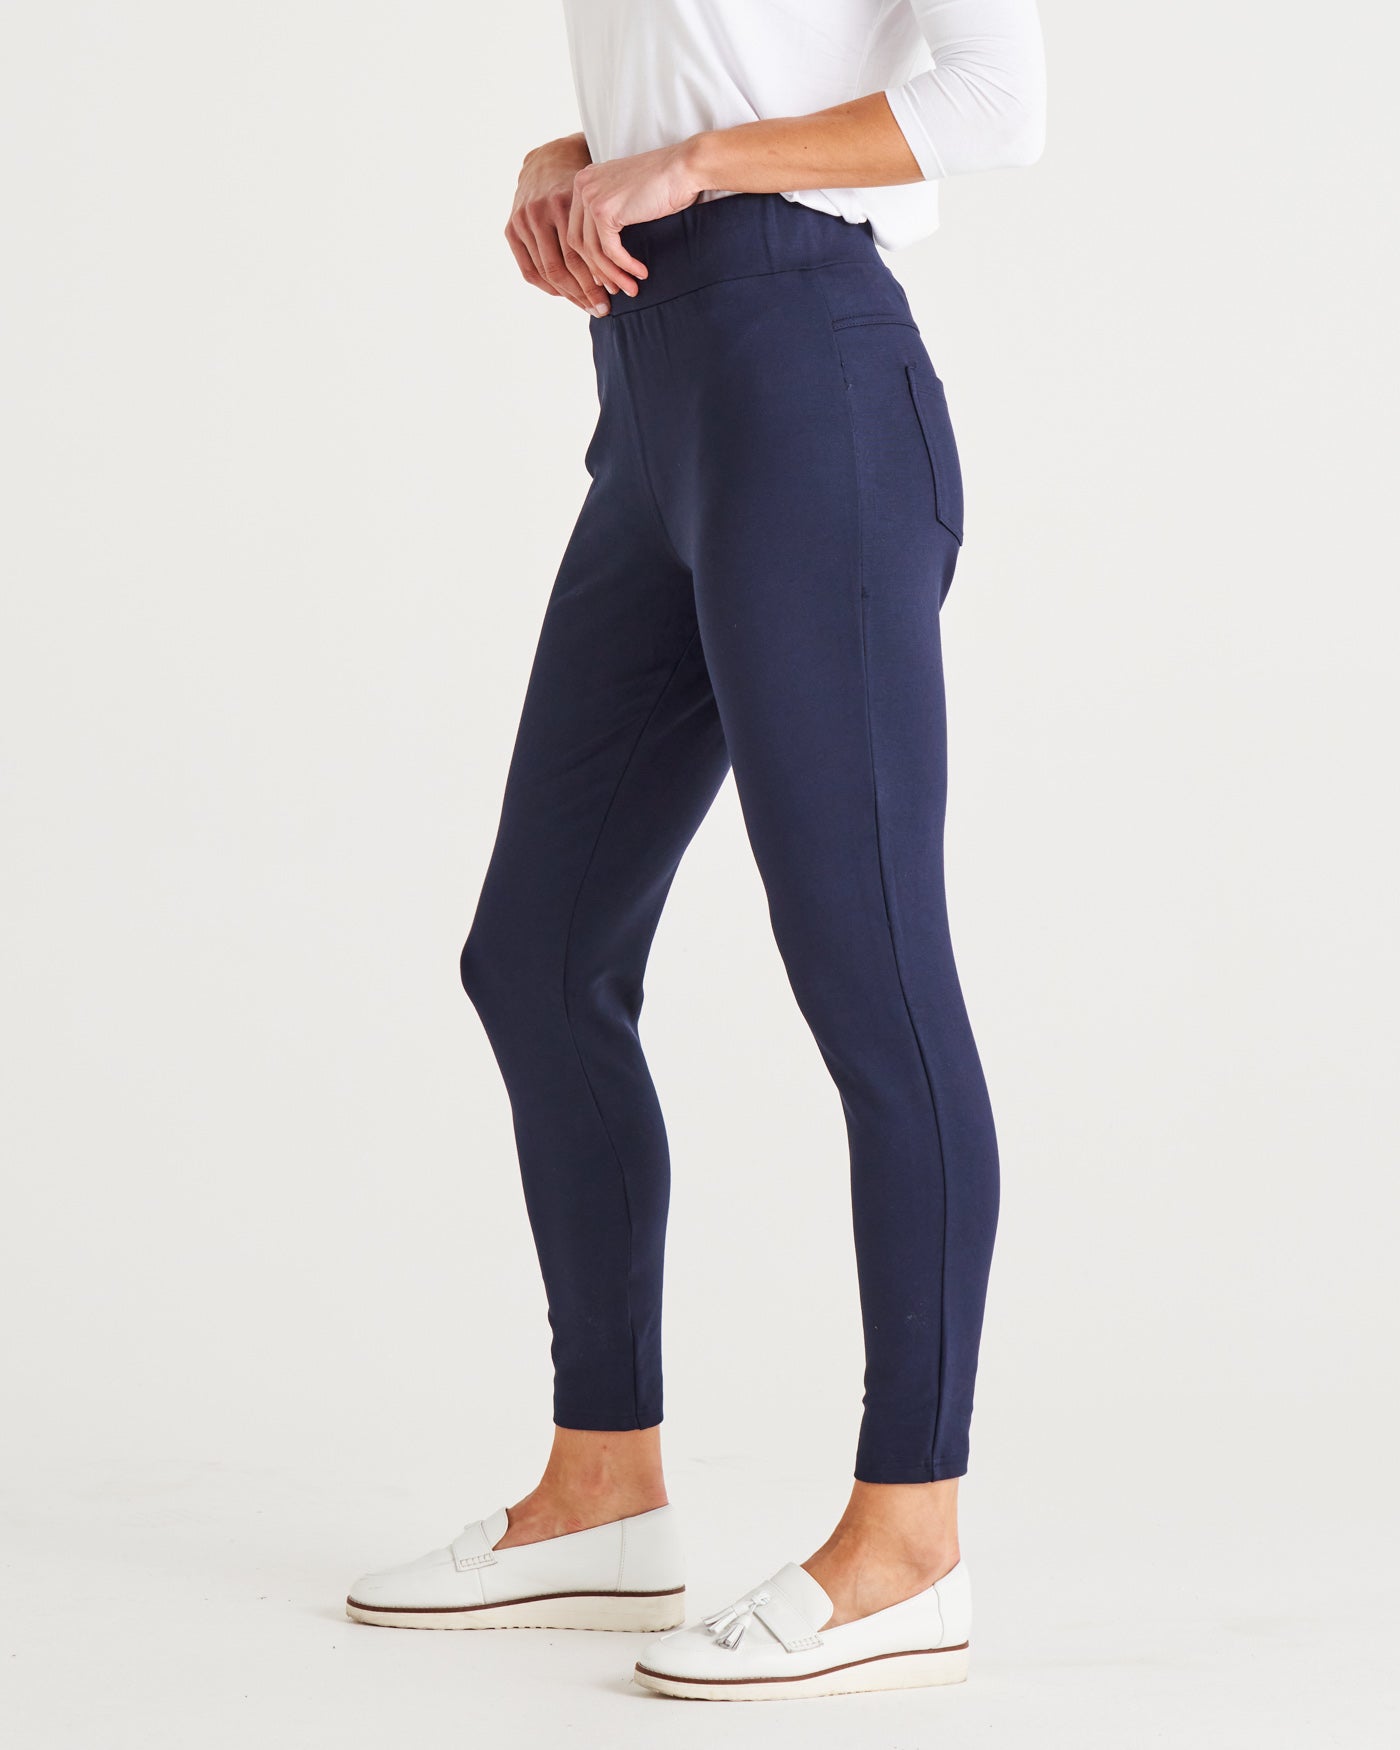 Royal Blue Viscose Ankle Legging  leggings for women – The Pajama Factory